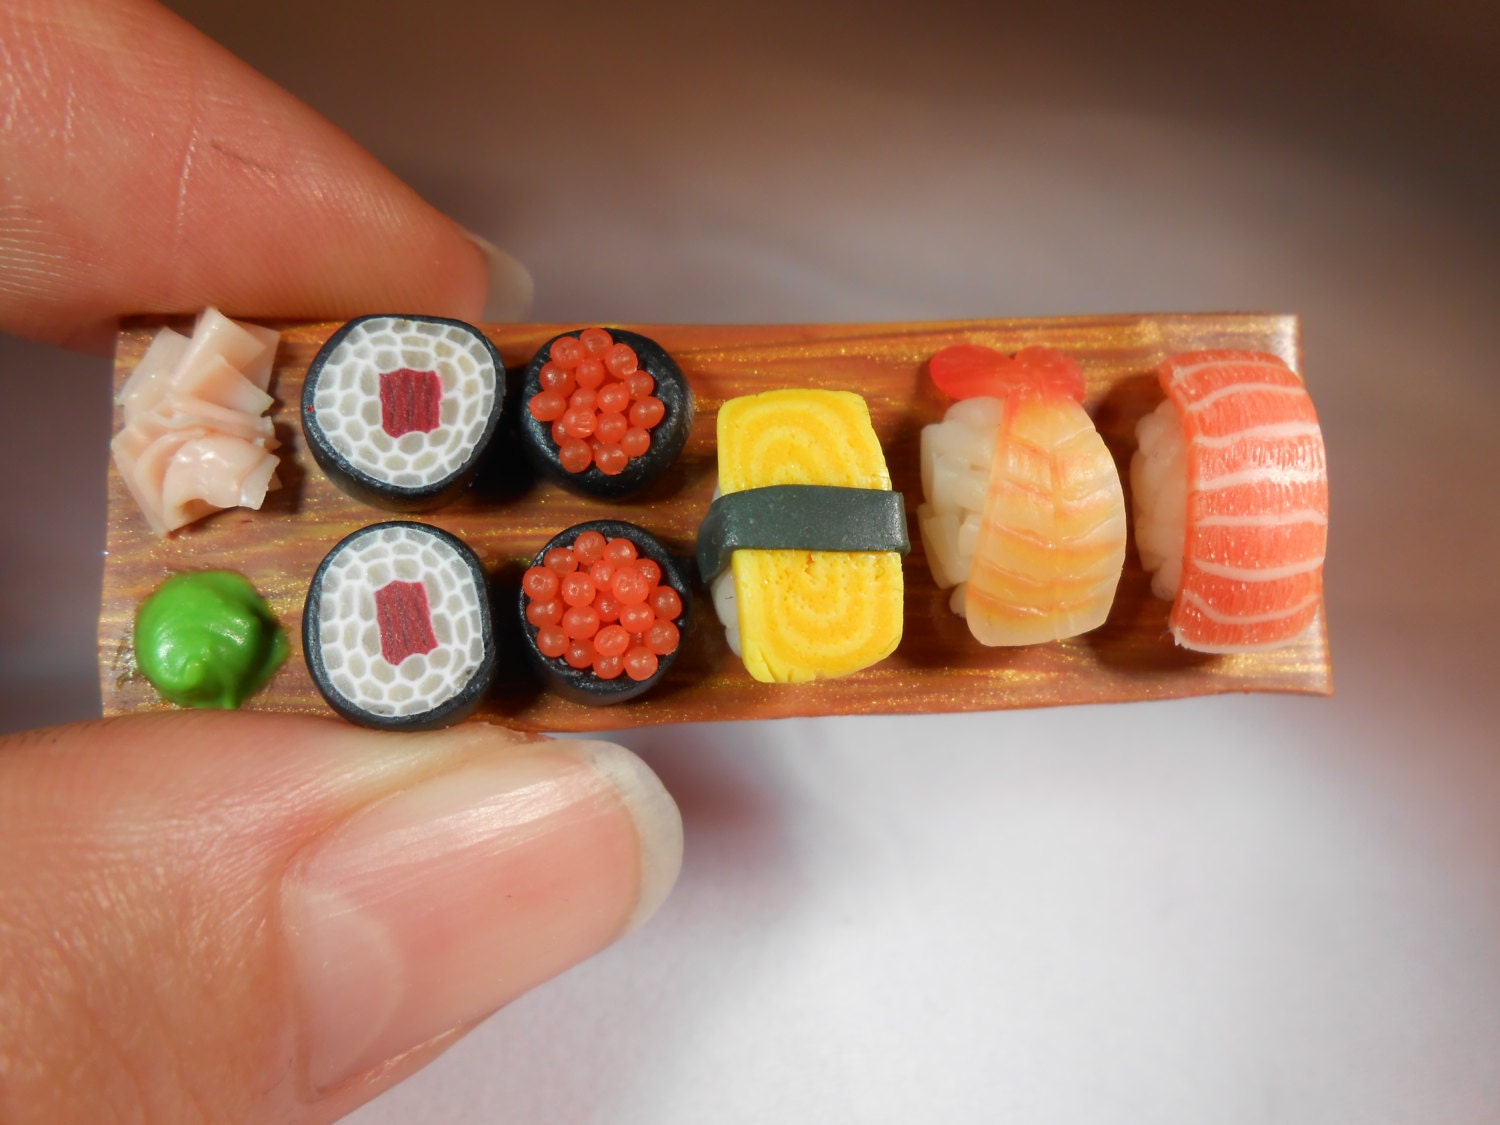 Sushi Platter Mini Clay Kit - Cheeky Monkey Toys